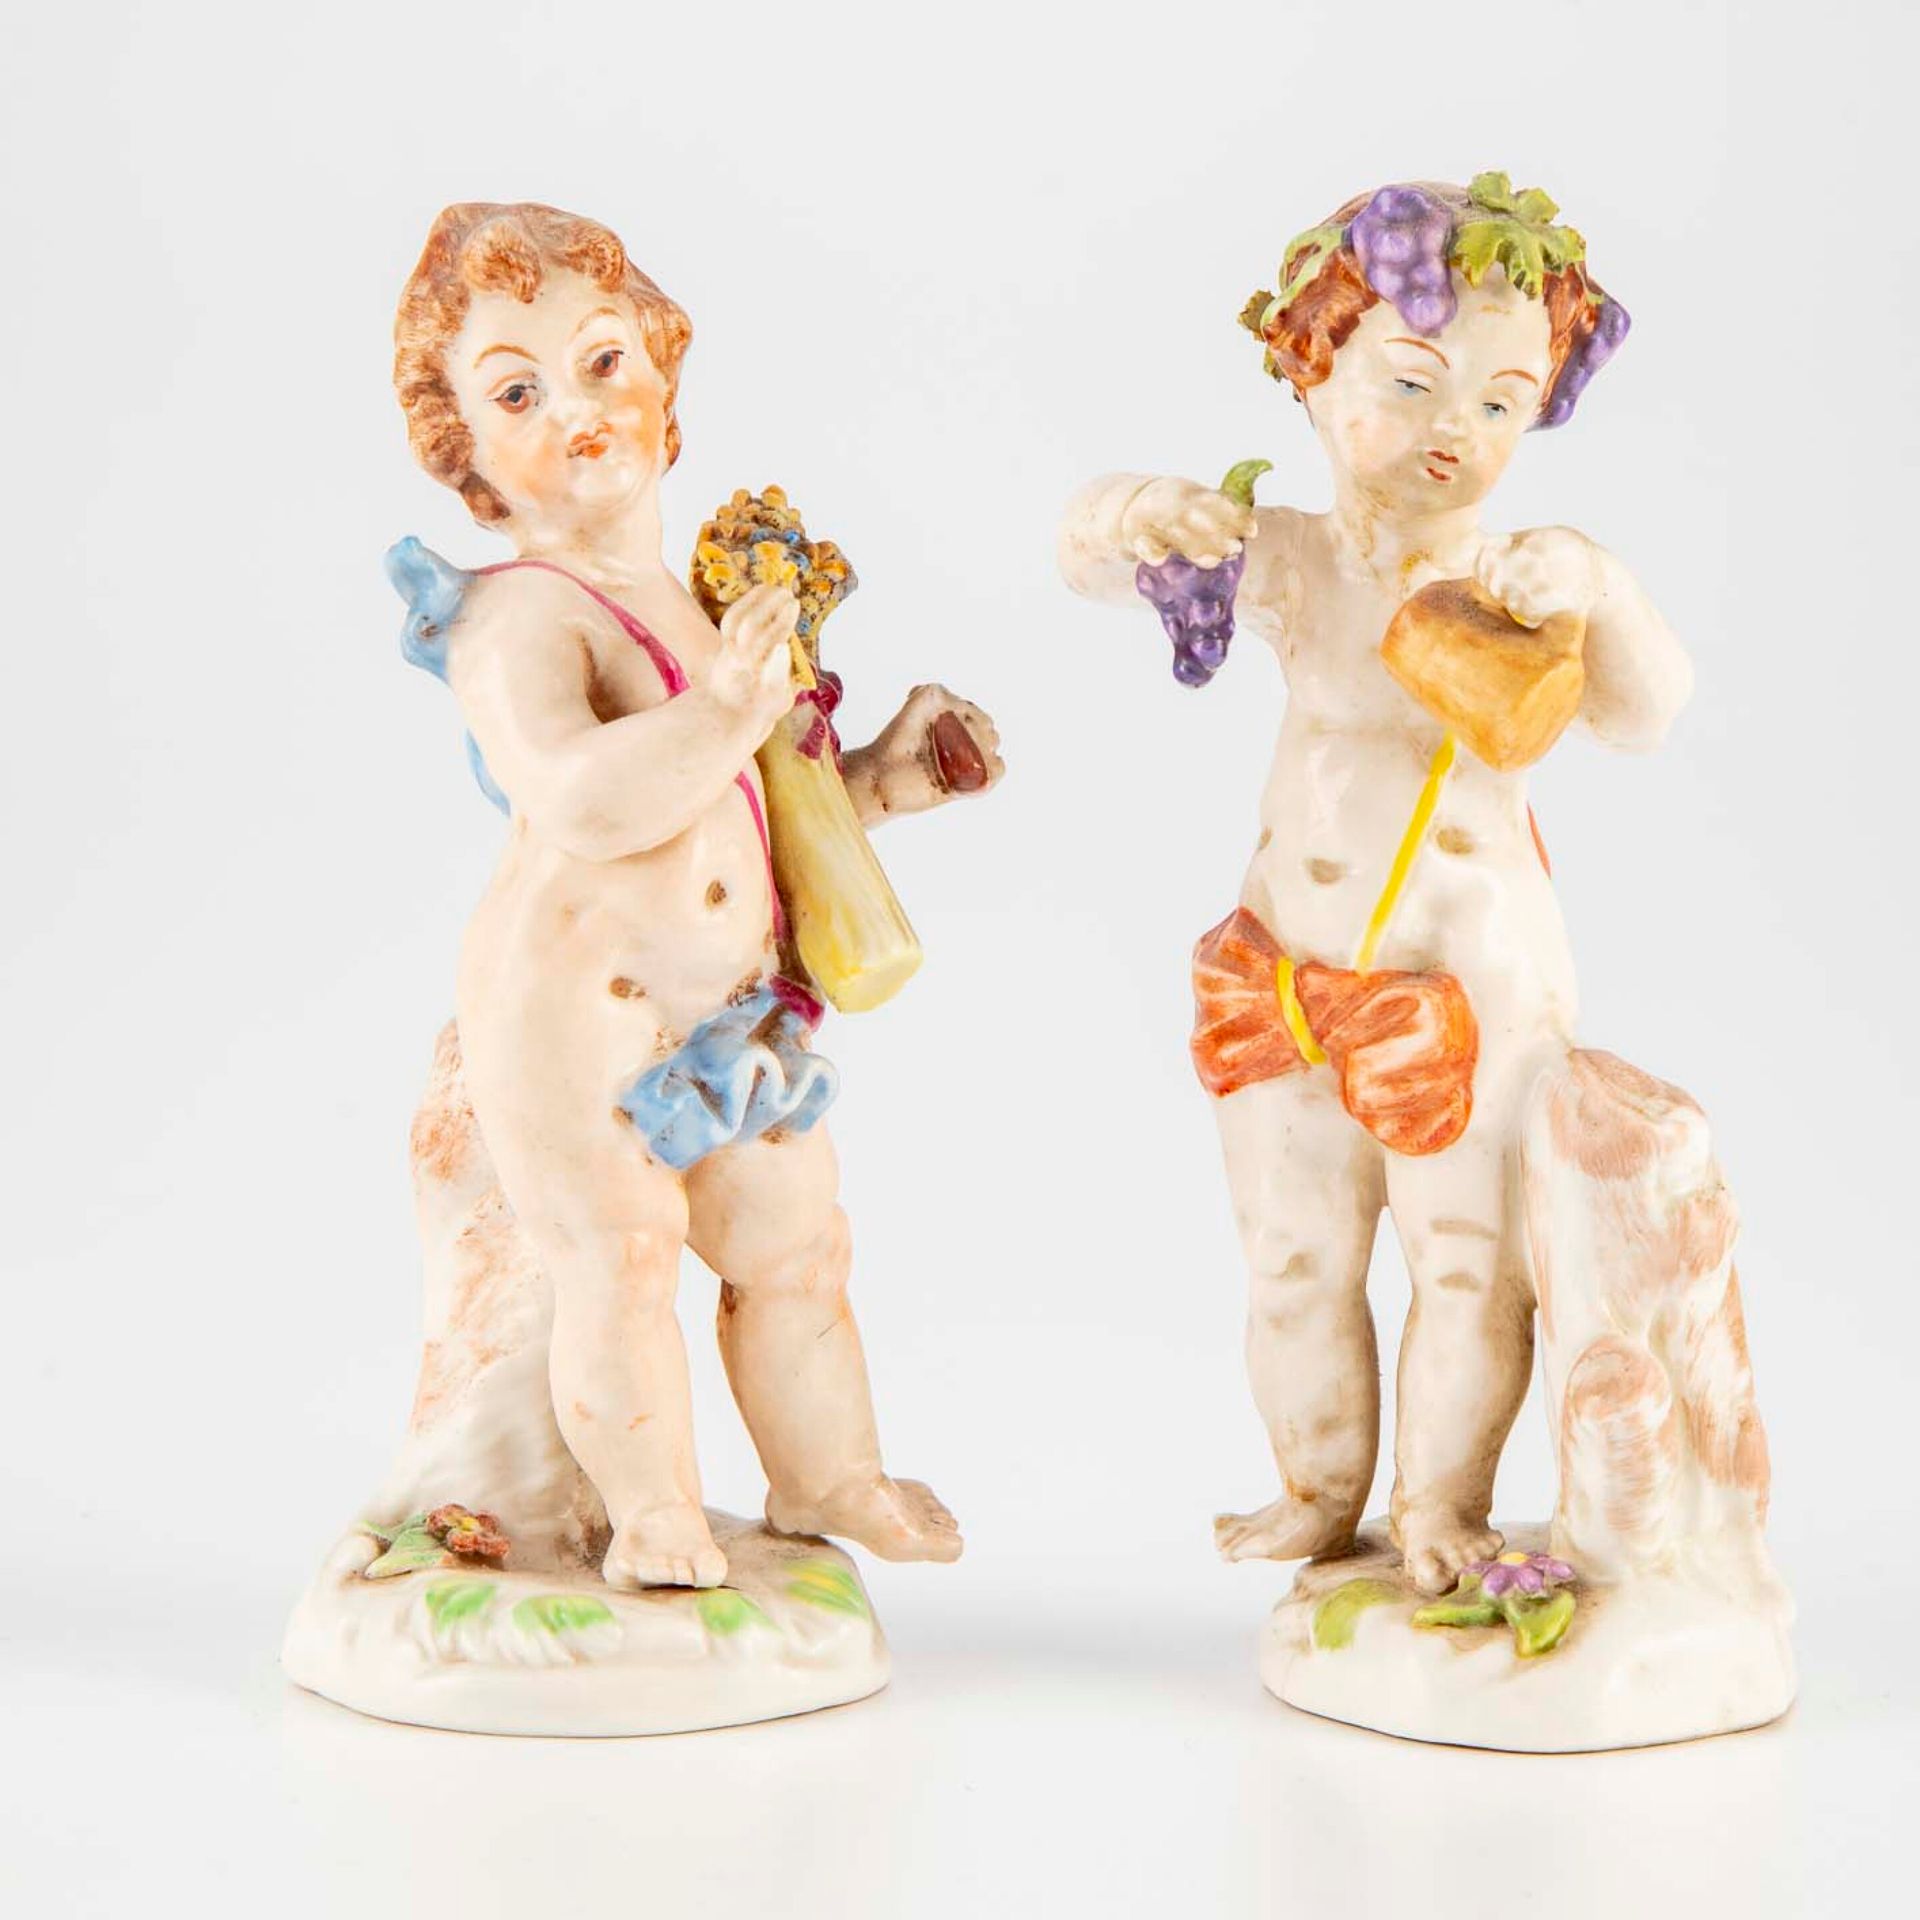 NAPLES 那不勒斯（类似于

两件表现秋天和夏天的爱情寓言的瓷器雕像

19世纪末

H.12厘米

小碎片